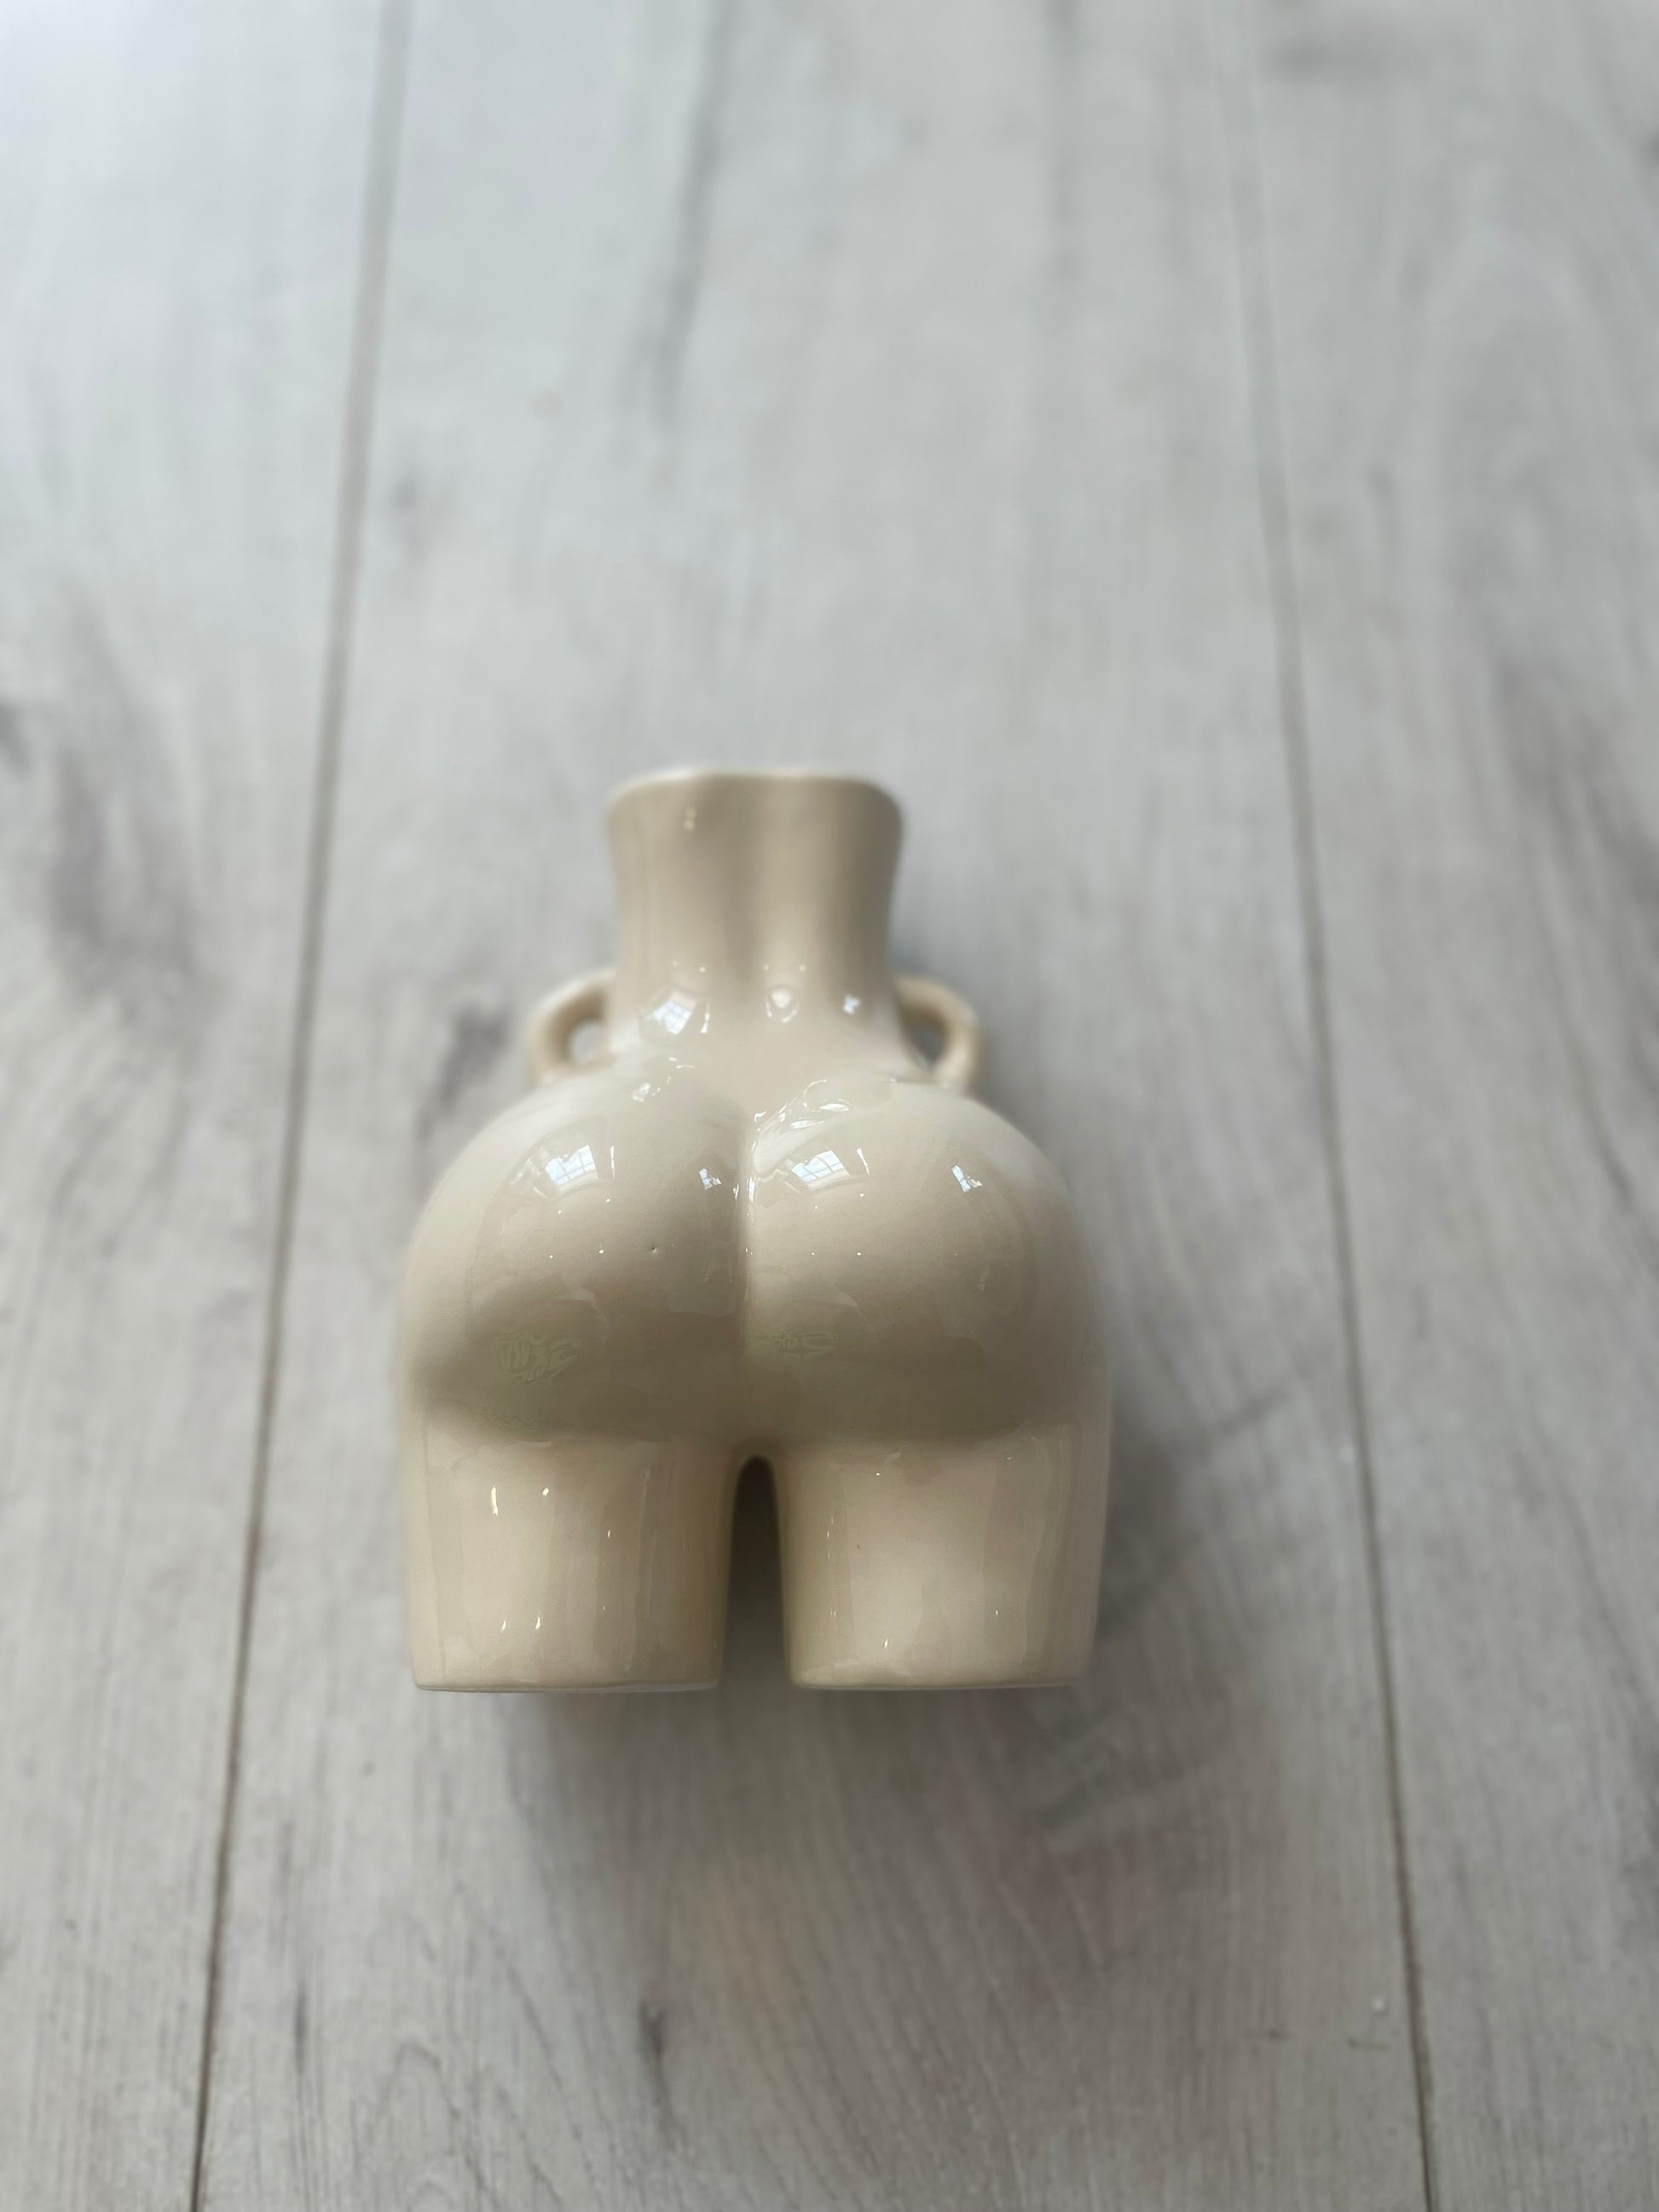 Mini Beige Cheeky Bum Vase Croft Home Decor